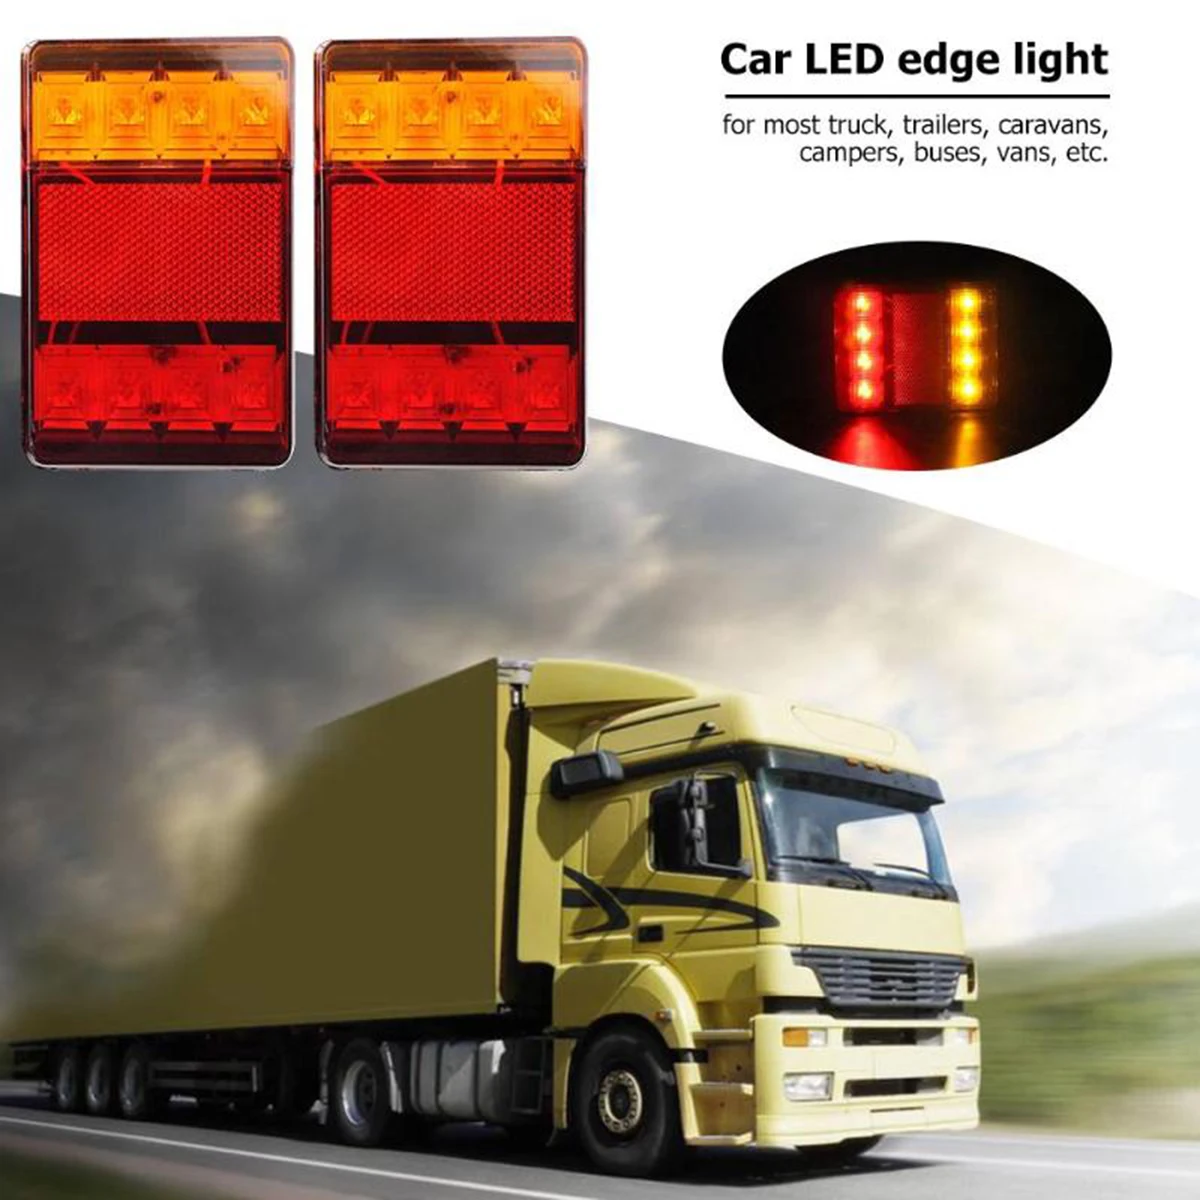 

2Pcs 8LED 12V Truck Vans Trailer Tail Lamp Brake Indicator Tail Light For most truck trailers caravans campers buses